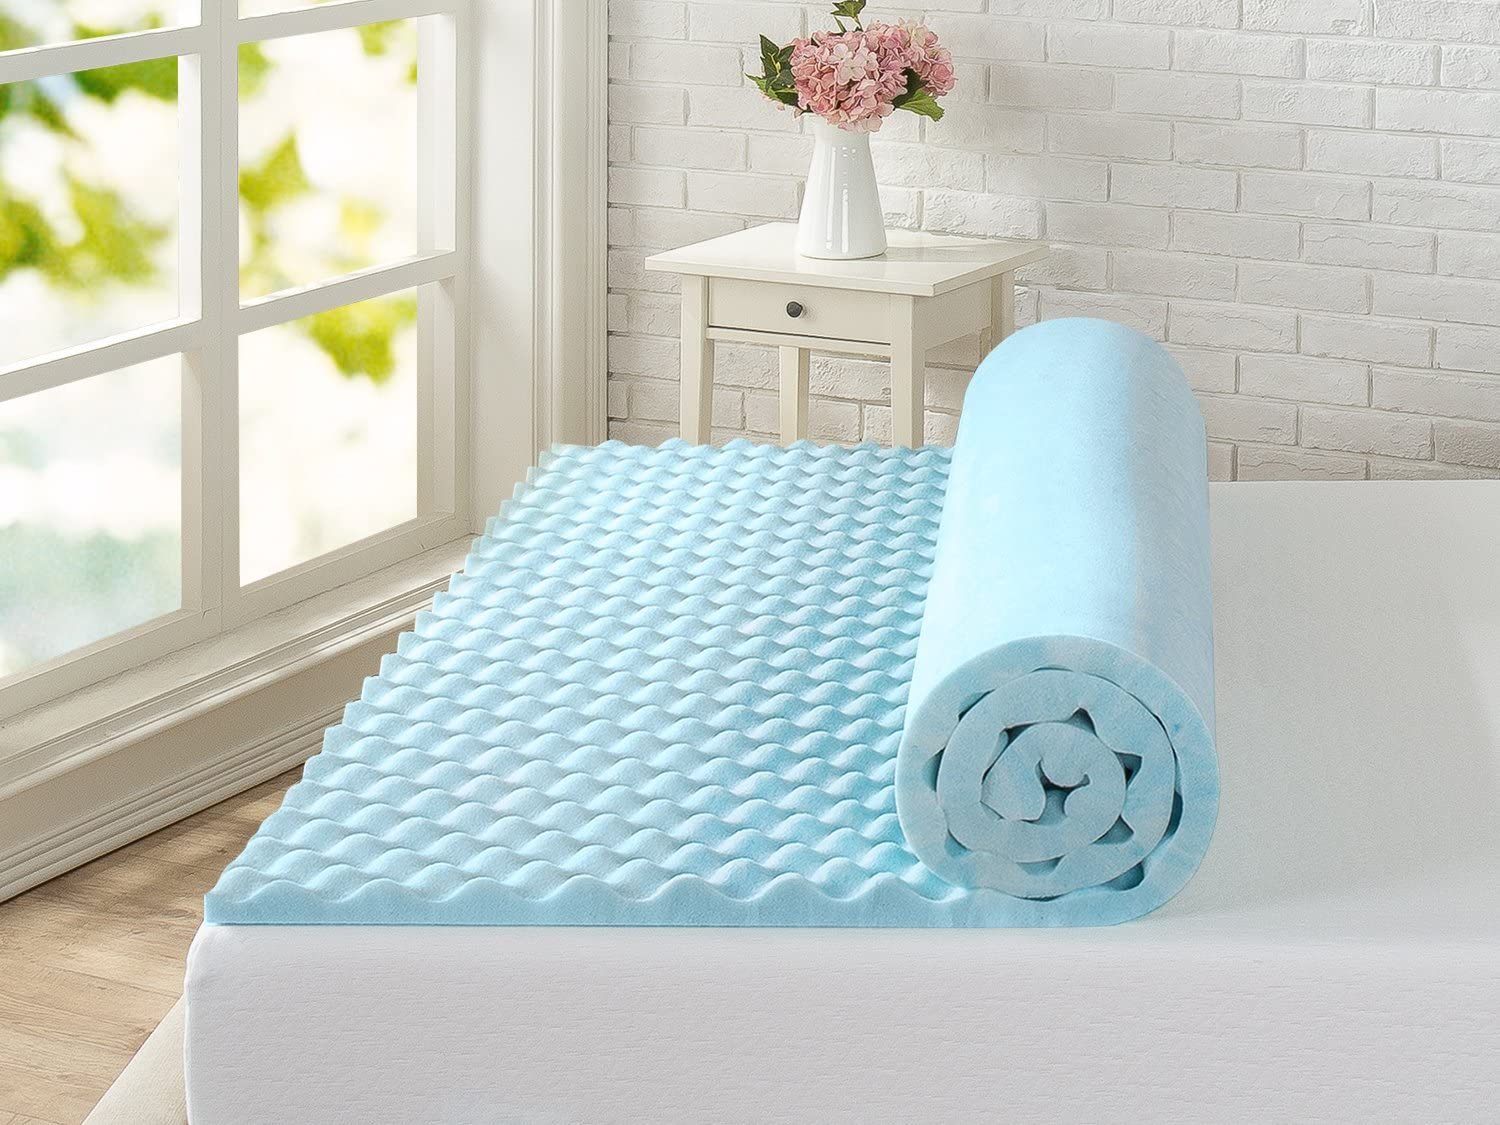 convoluted mattress topper benefits